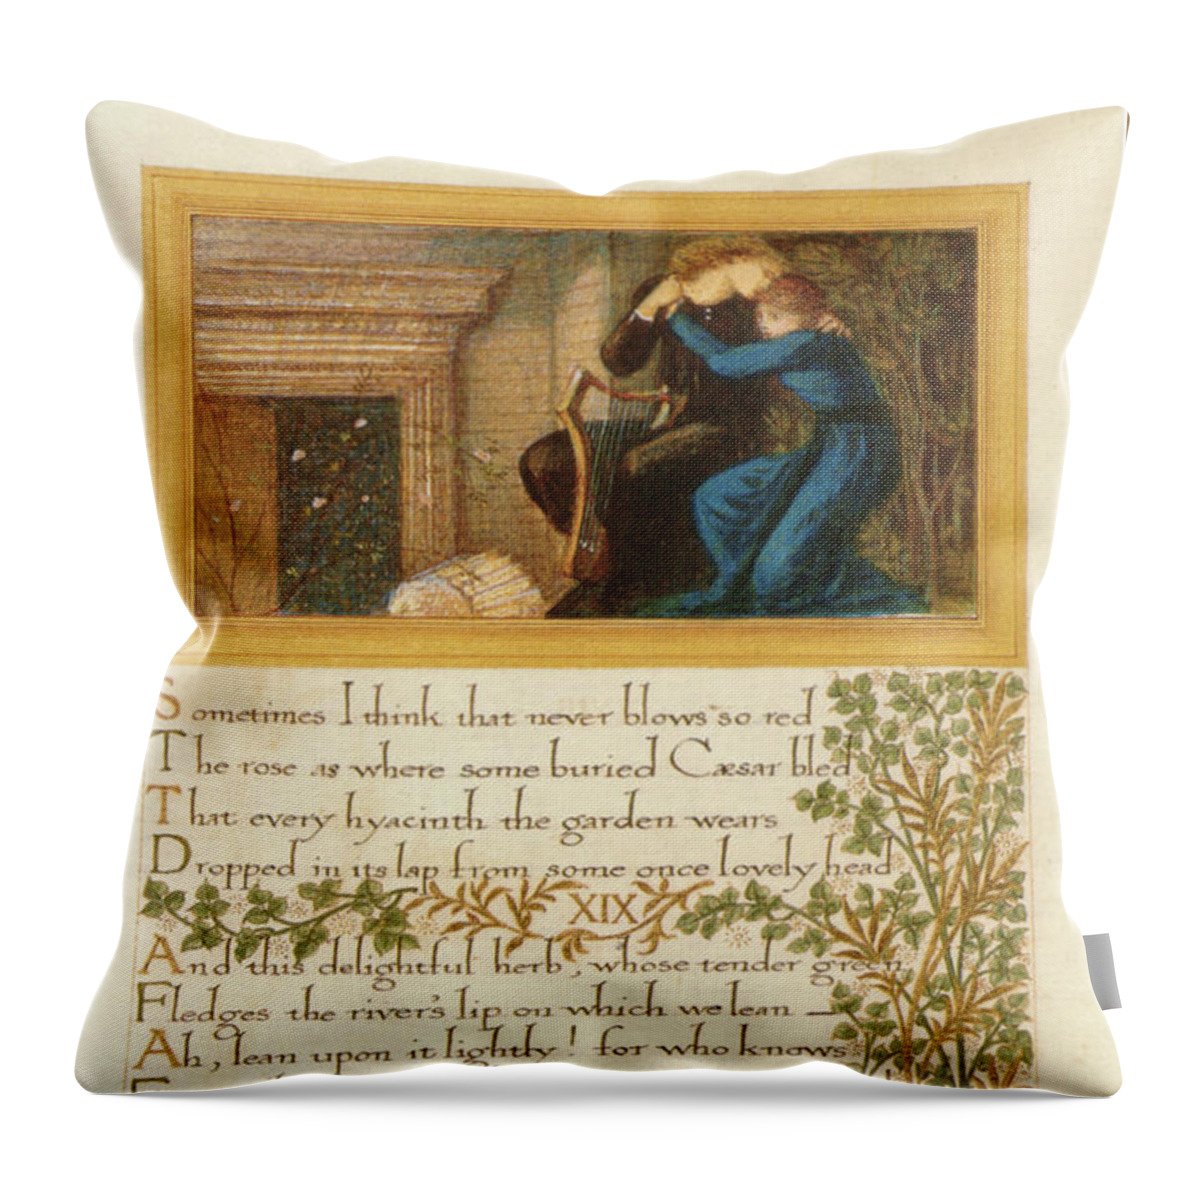 Rubaiyat_morris_burne-jones_manuscript Throw Pillow featuring the painting Rubaiyat of Omar Khayyam 1870 by Edward Burne Jones